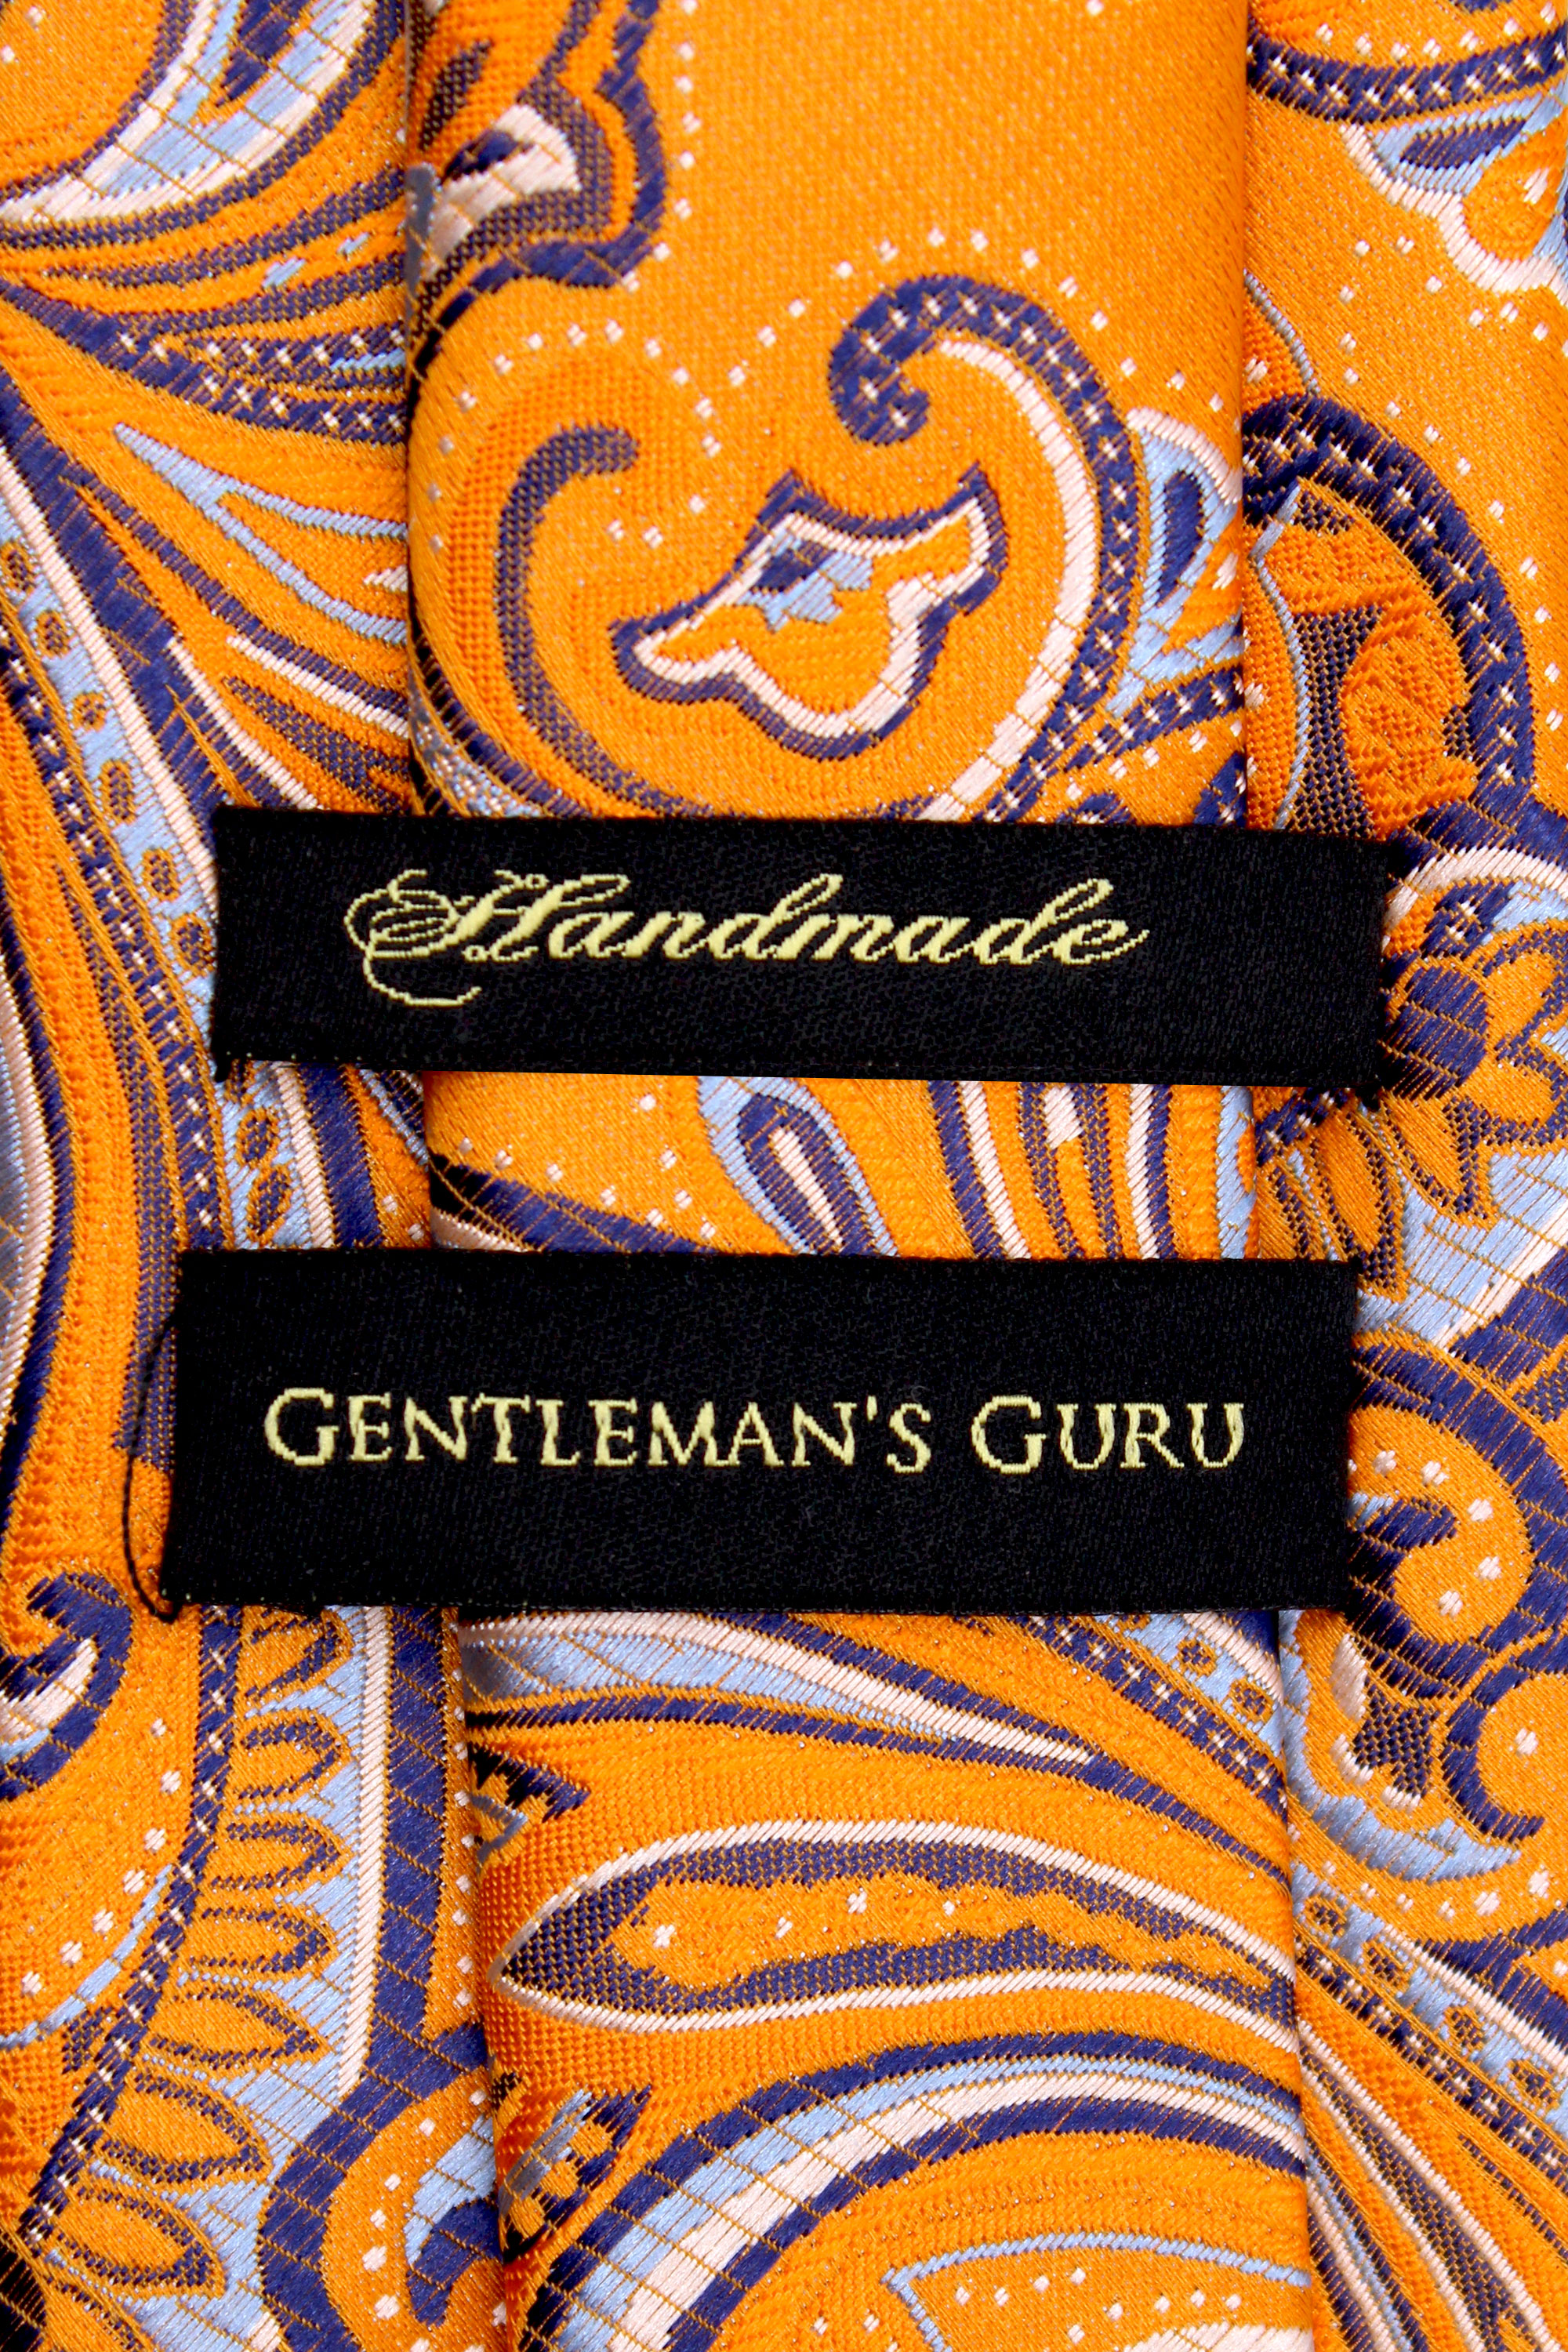 Orange-Navy-Blue-Branded-Tie-Handmade-from-Gentlemansguru.com